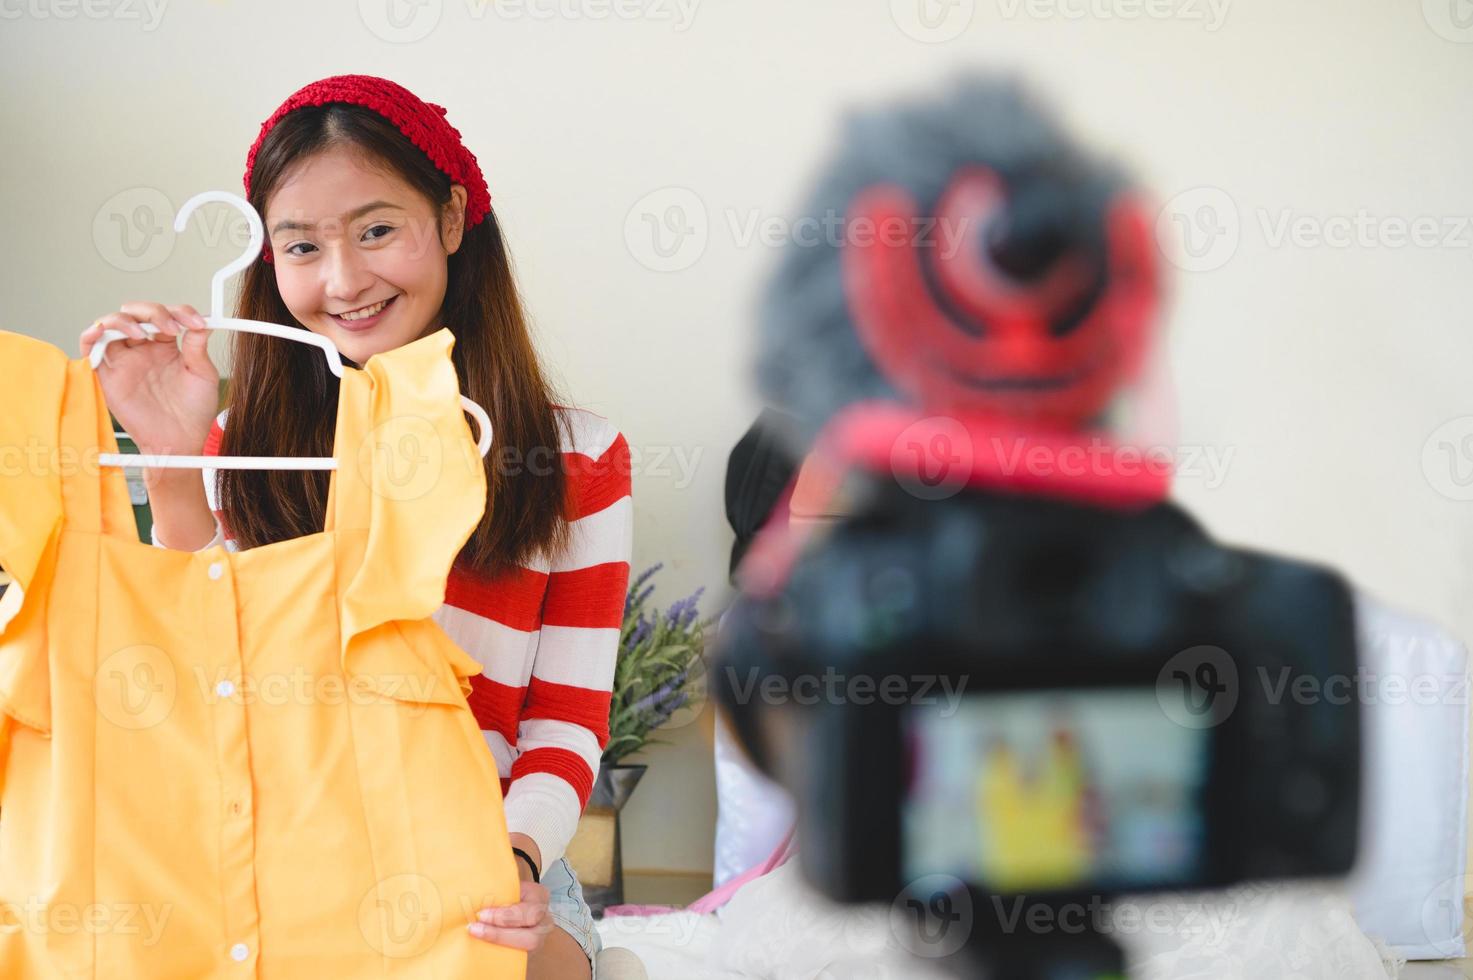 Entrevista de blogger vlogger asiático con cámara digital réflex digital profesional foto